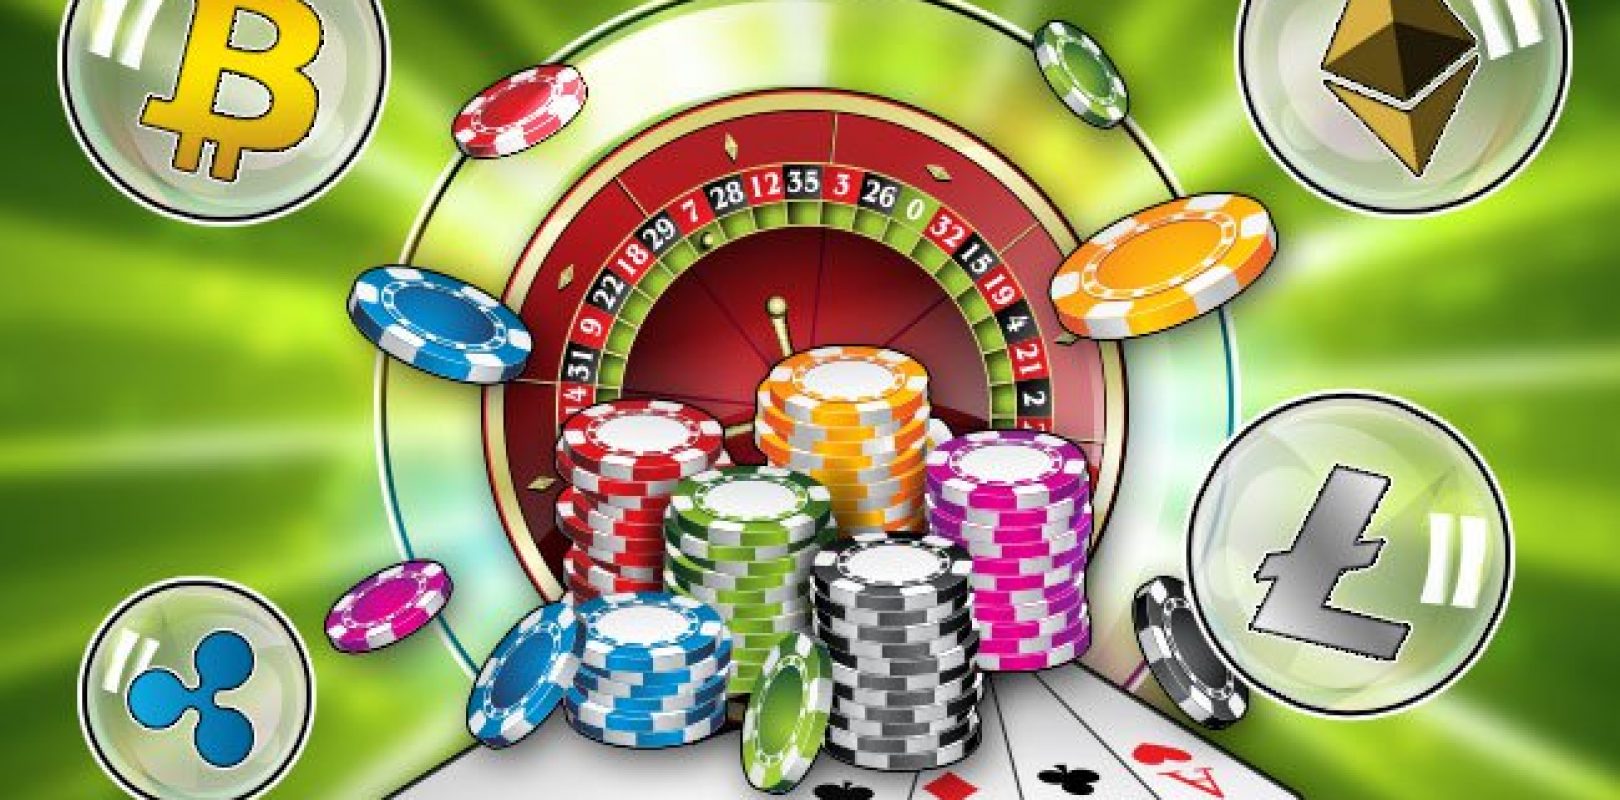 Four kings casino progressive jackpot